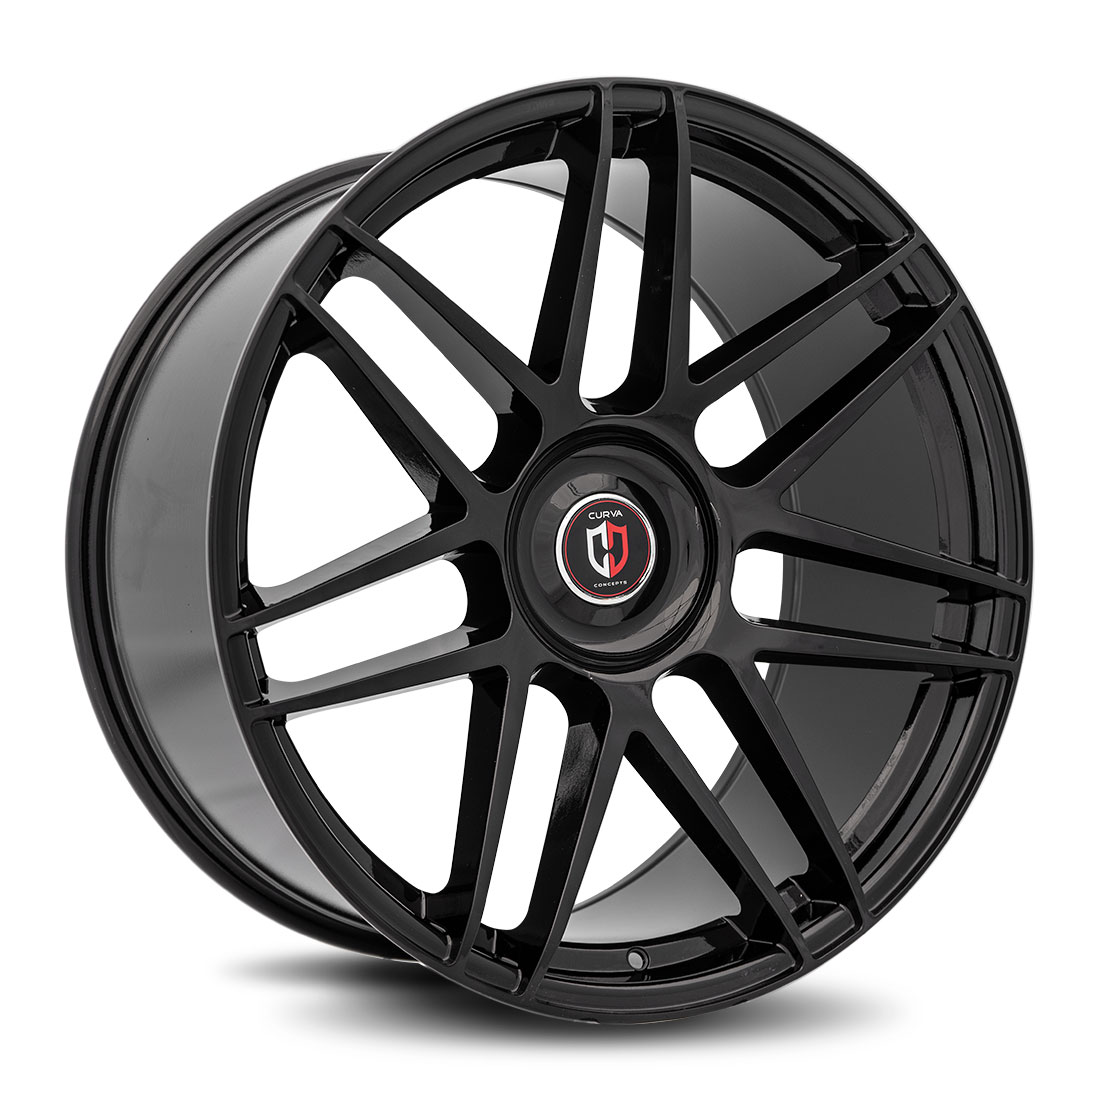 Curva Concepts C300 22 Inch Gloss Black Aftermarket Wheels